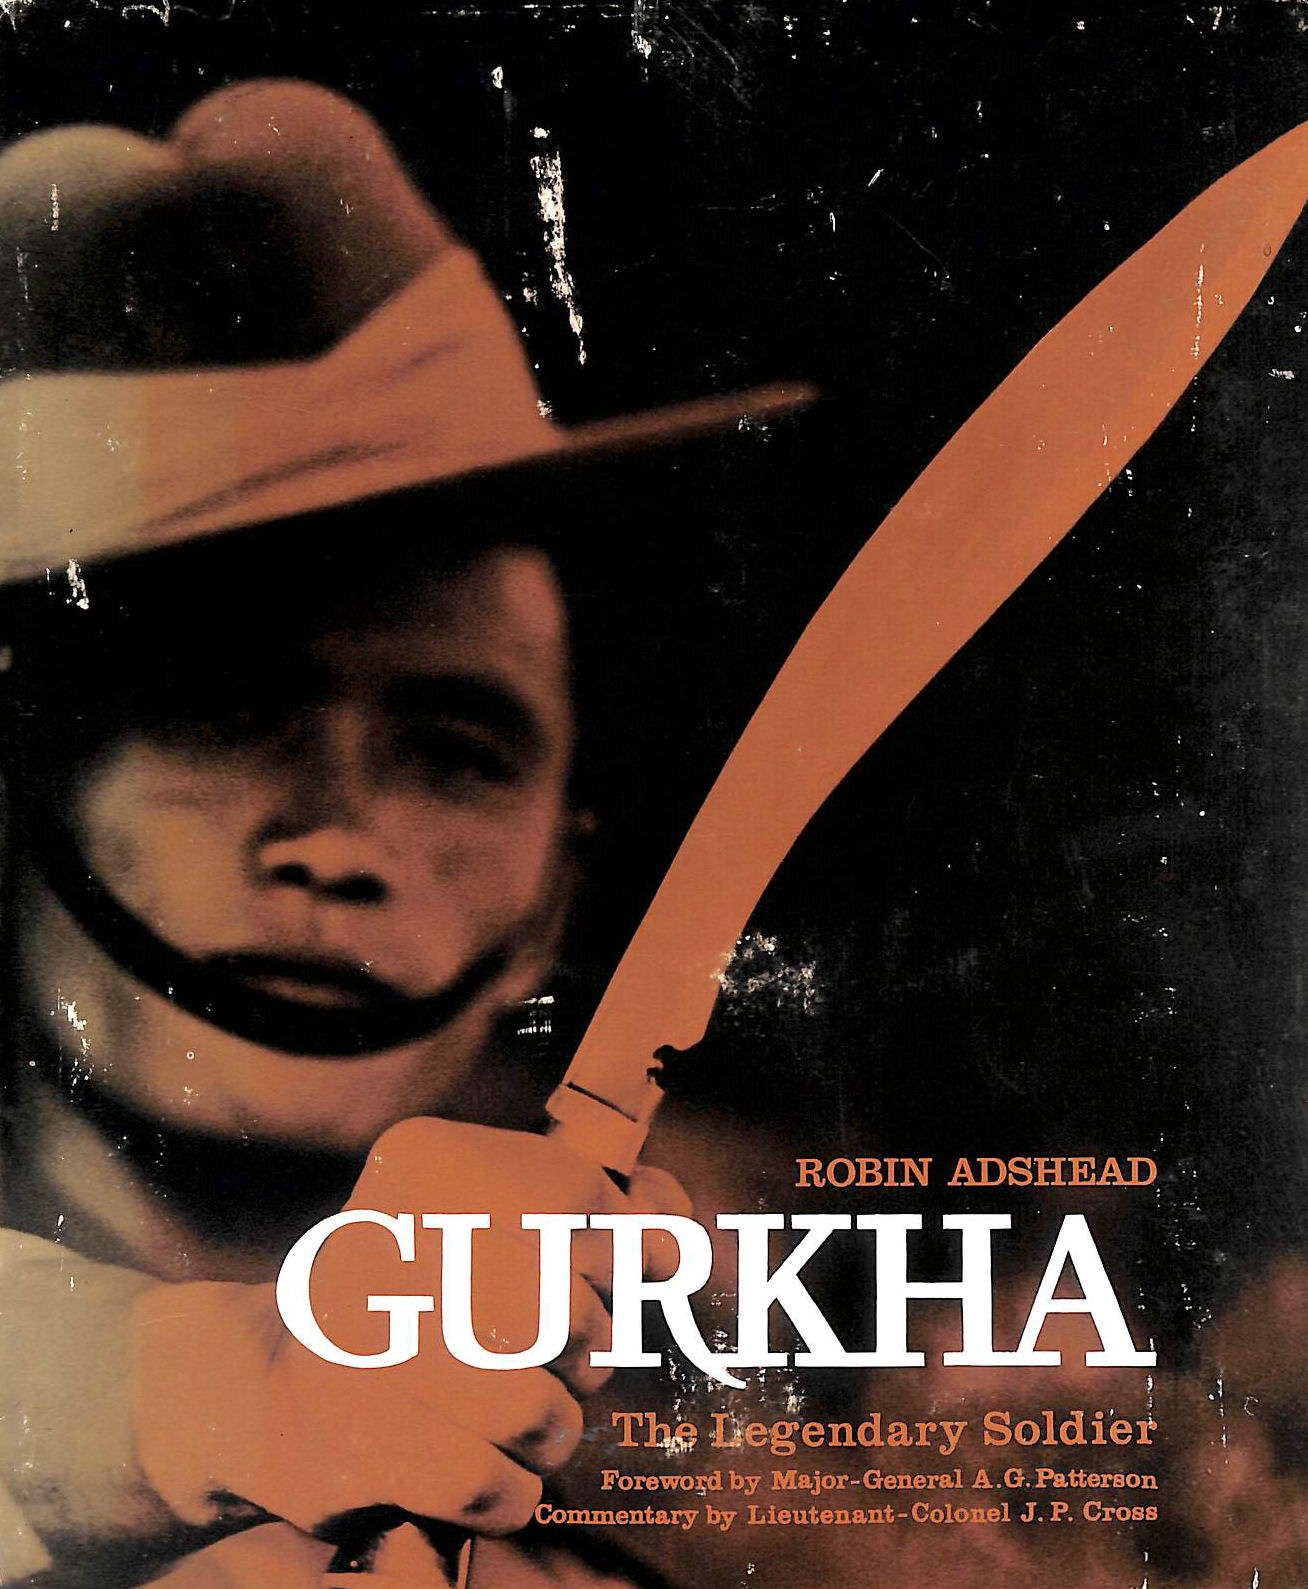 ROBIN ADSHEAD - Gurkha, The Legendary Soldier